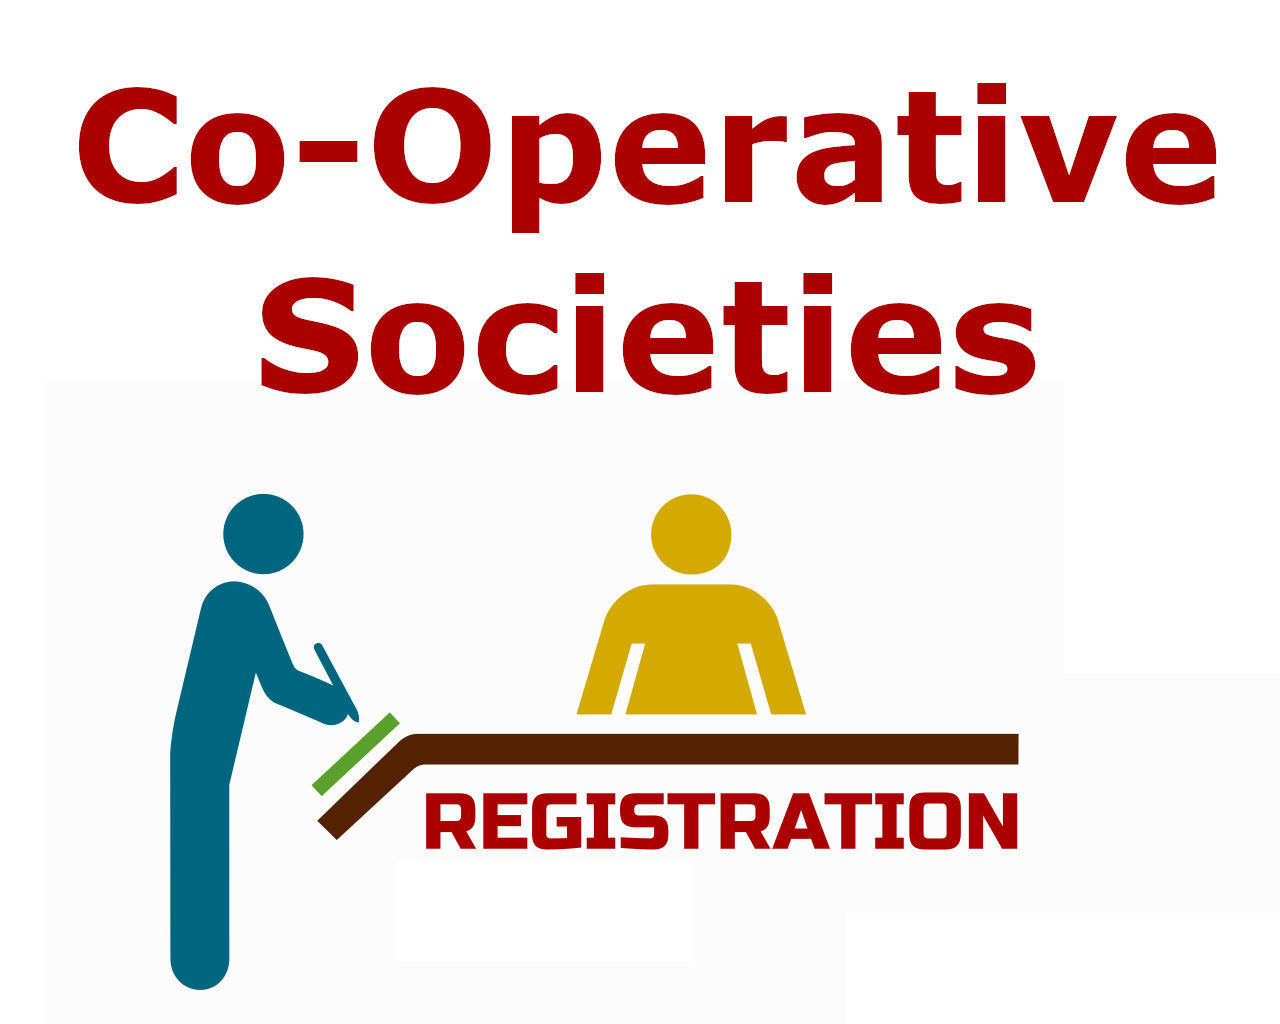 Society com. Registration. Wooldale co-operative Society.